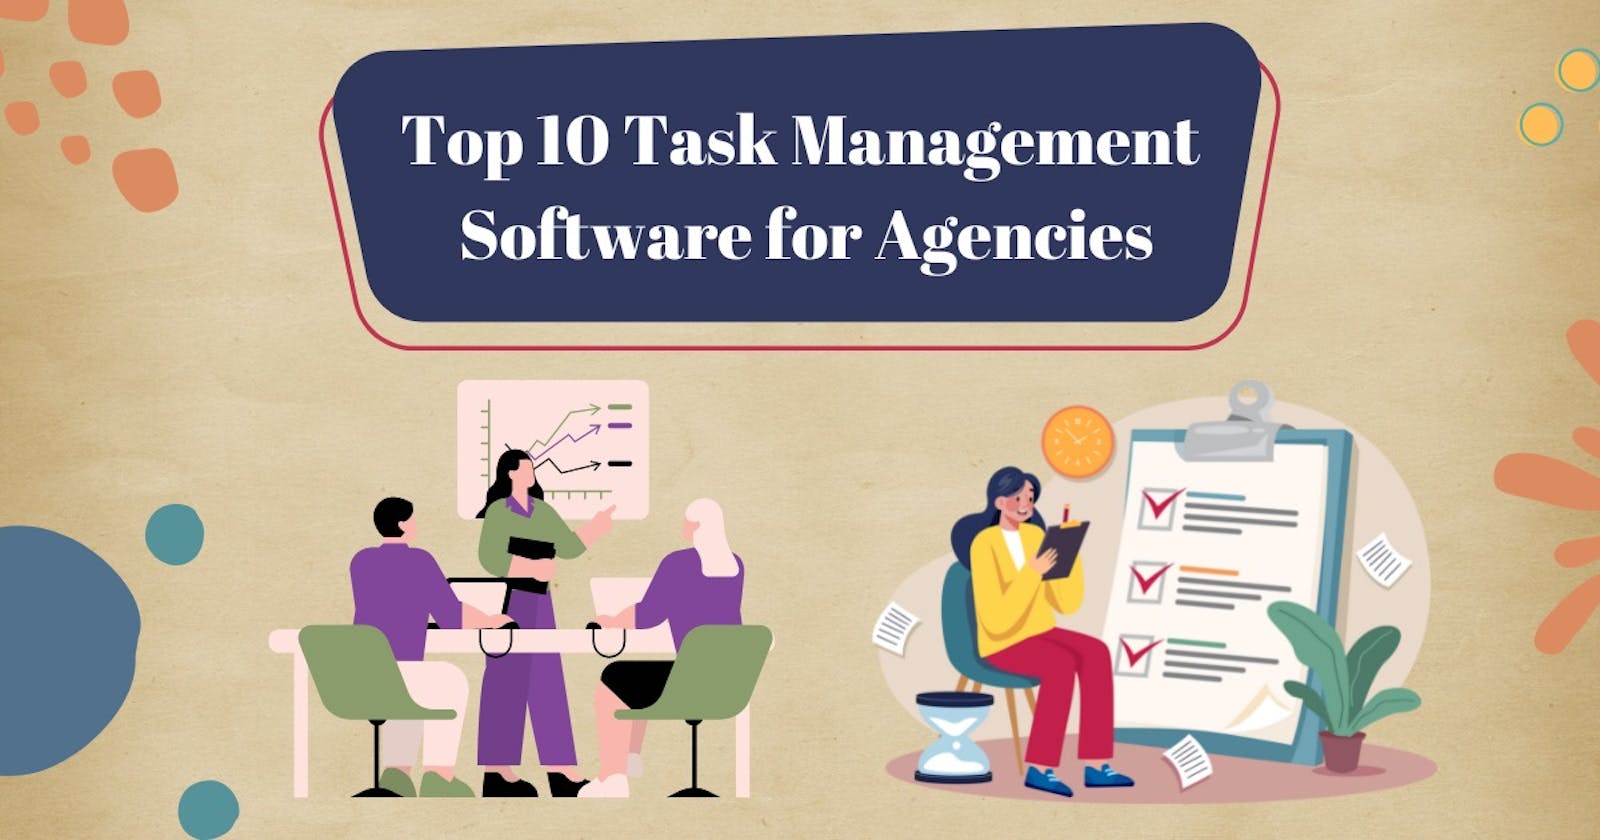 Top 10 Task Management Software for Agencies